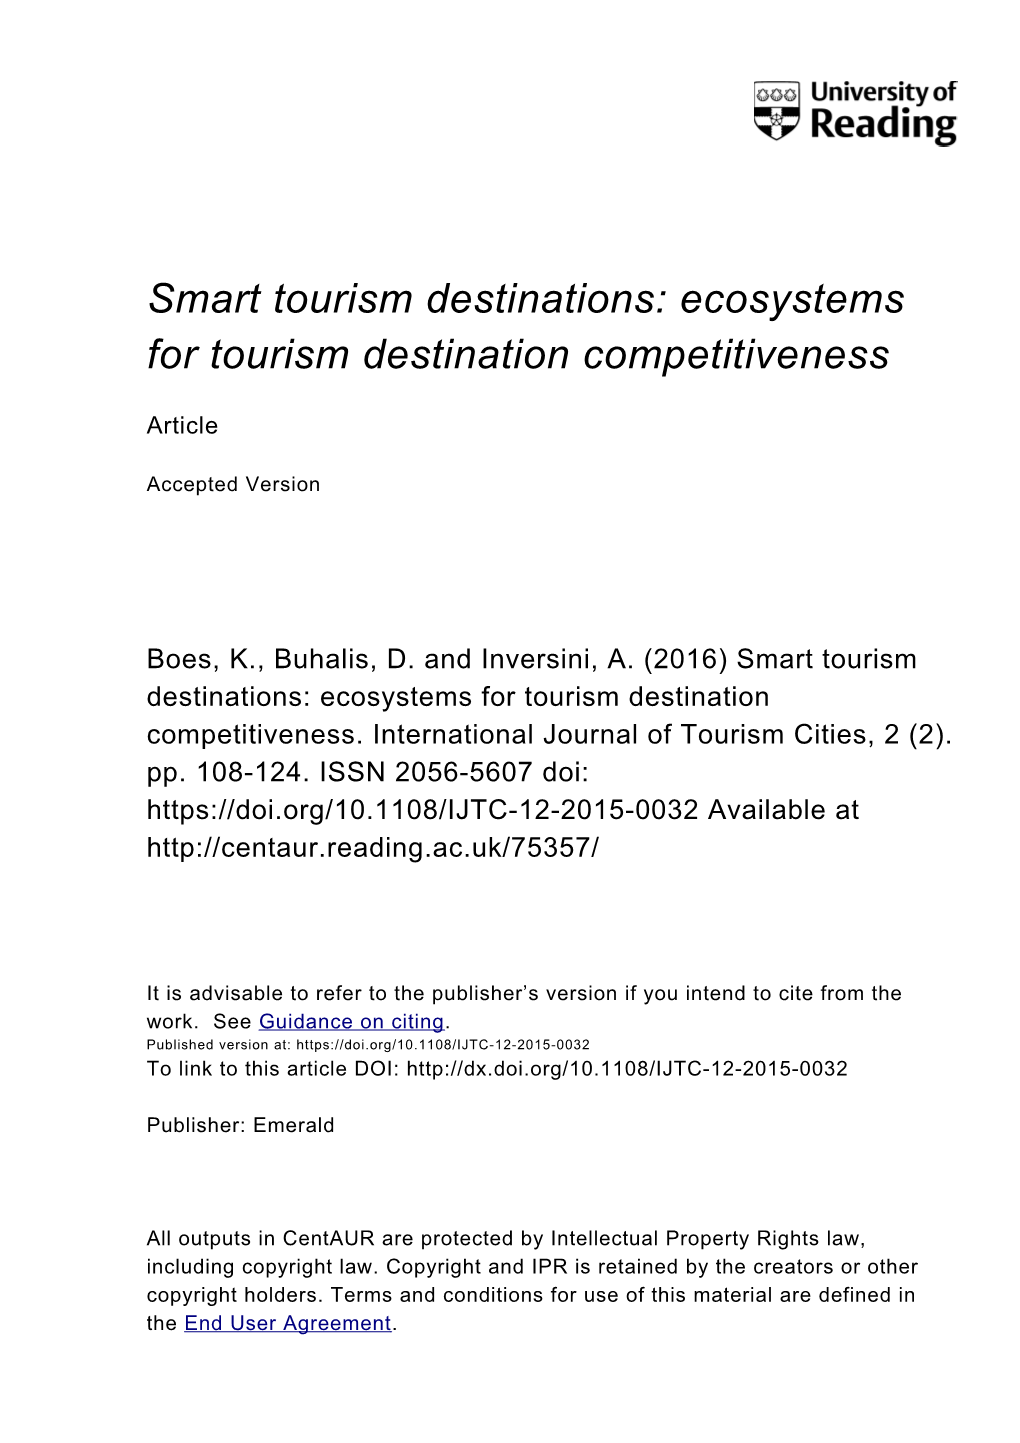 Smart Tourism Destinations: Ecosystems for Tourism Destination Competitiveness